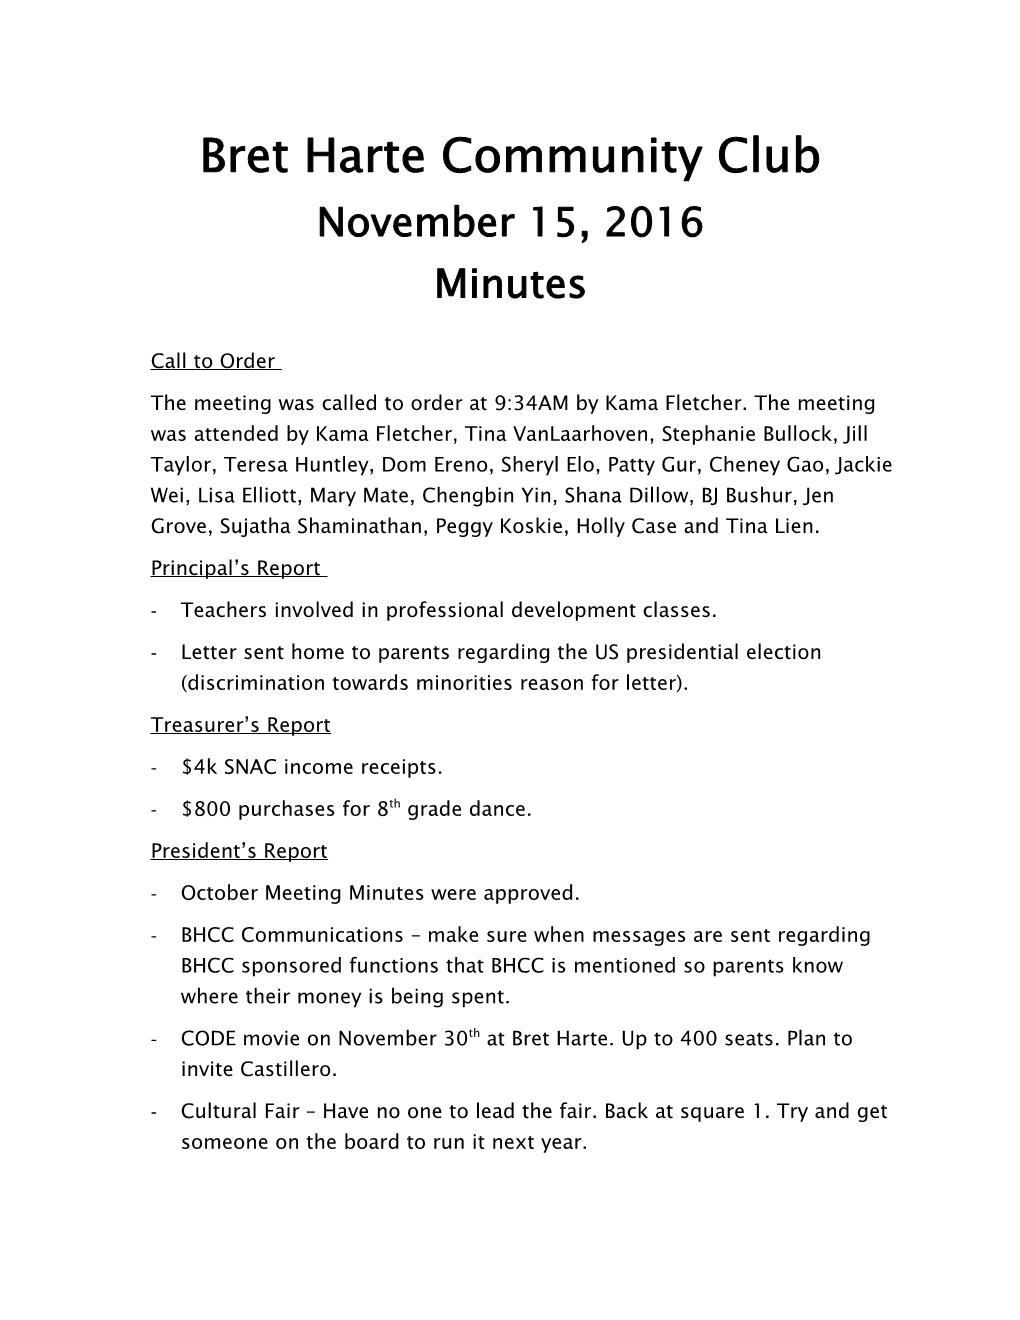 Bret Harte Community Club s1